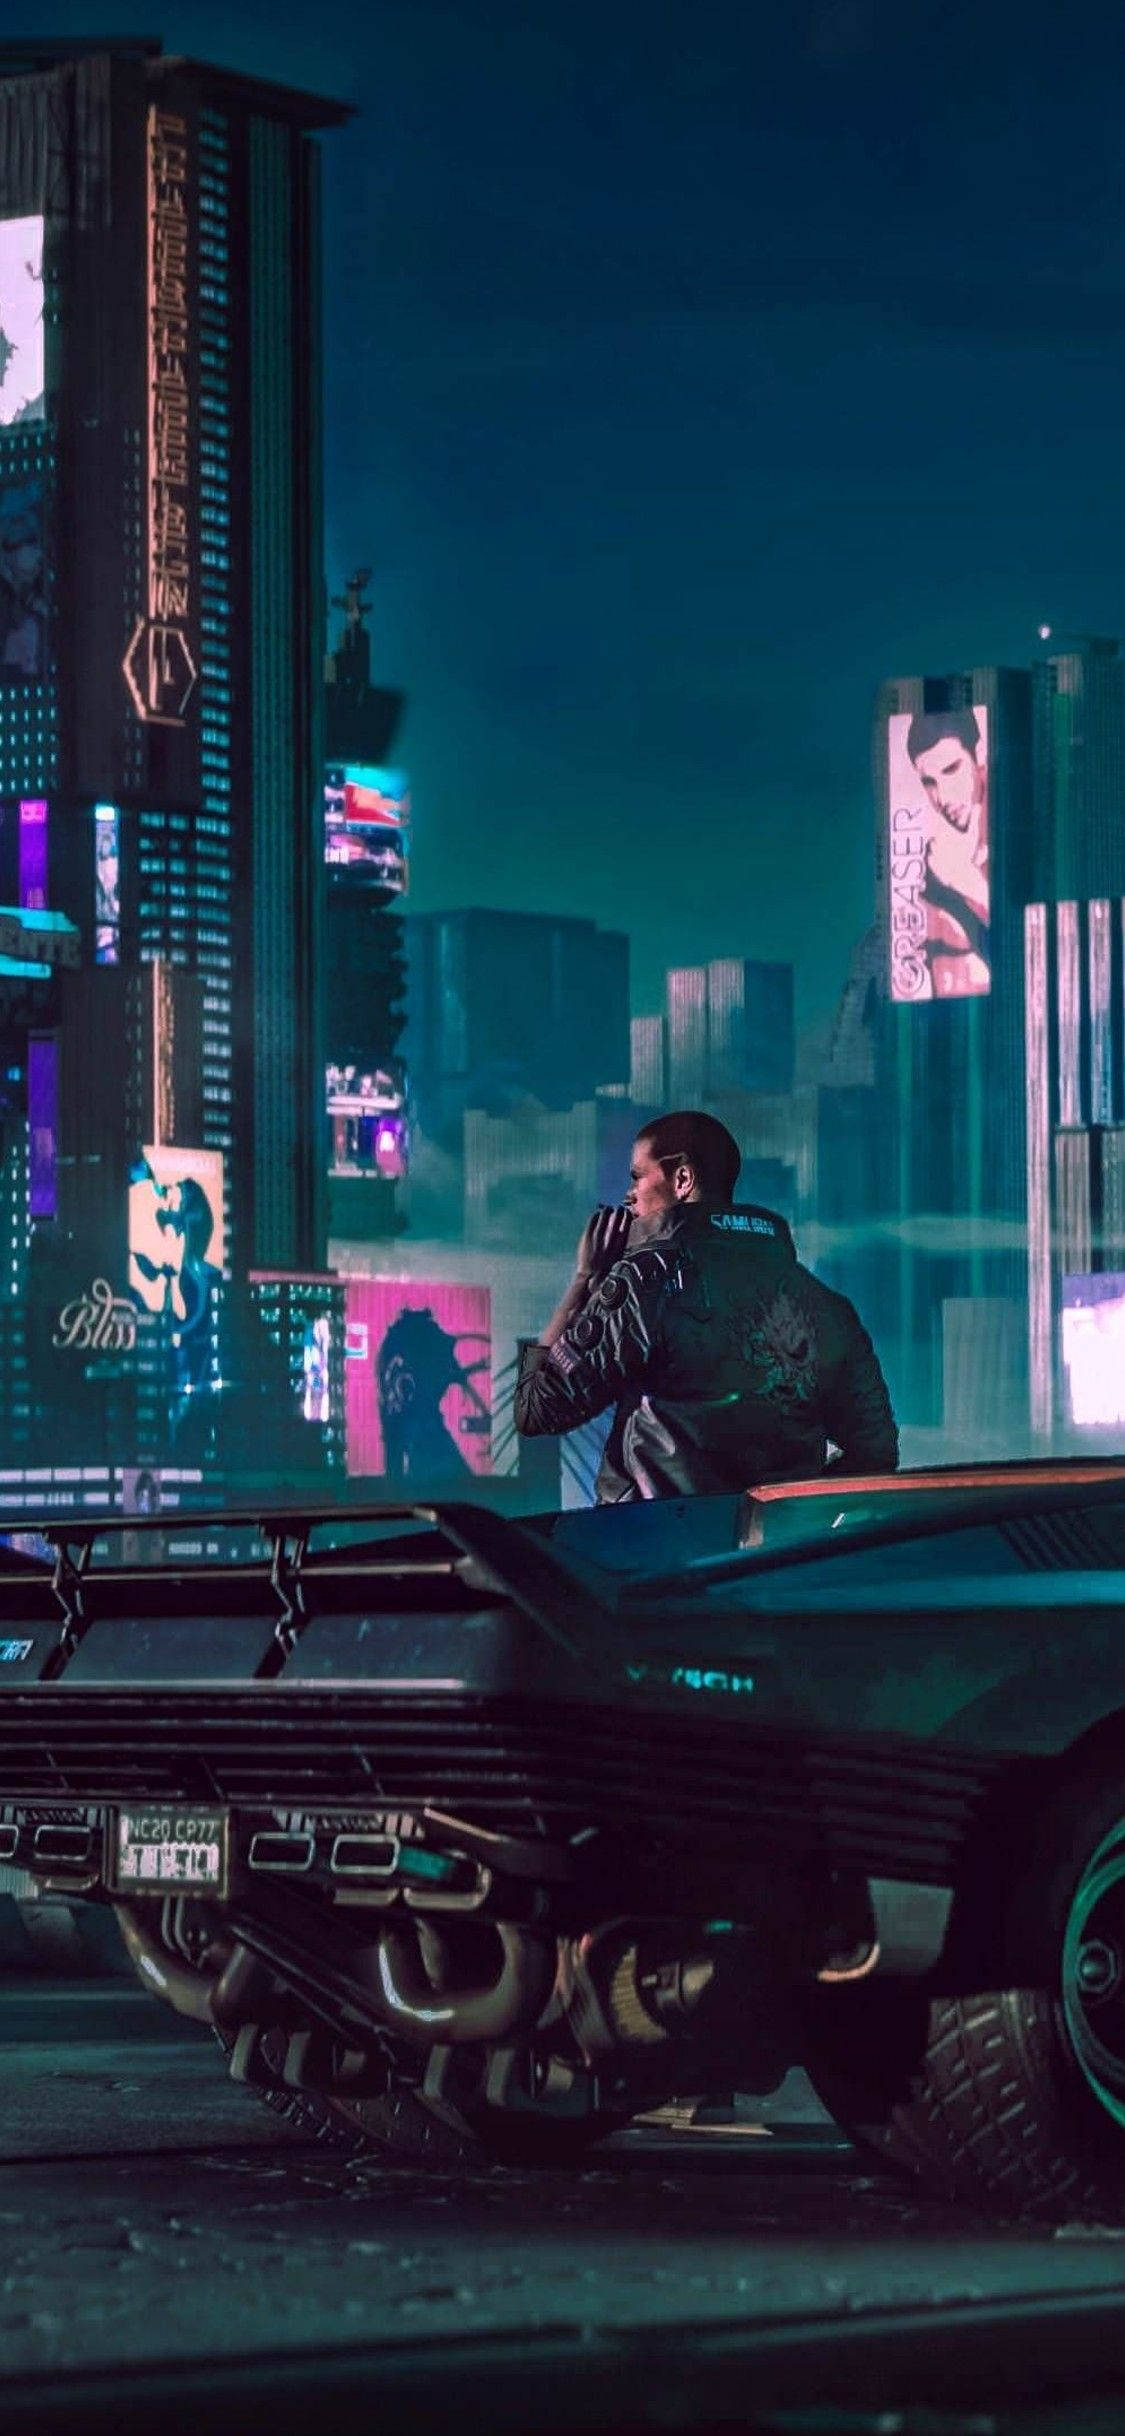 Caption: Futuristic Cyberpunk Car On The Streets Of Neon City